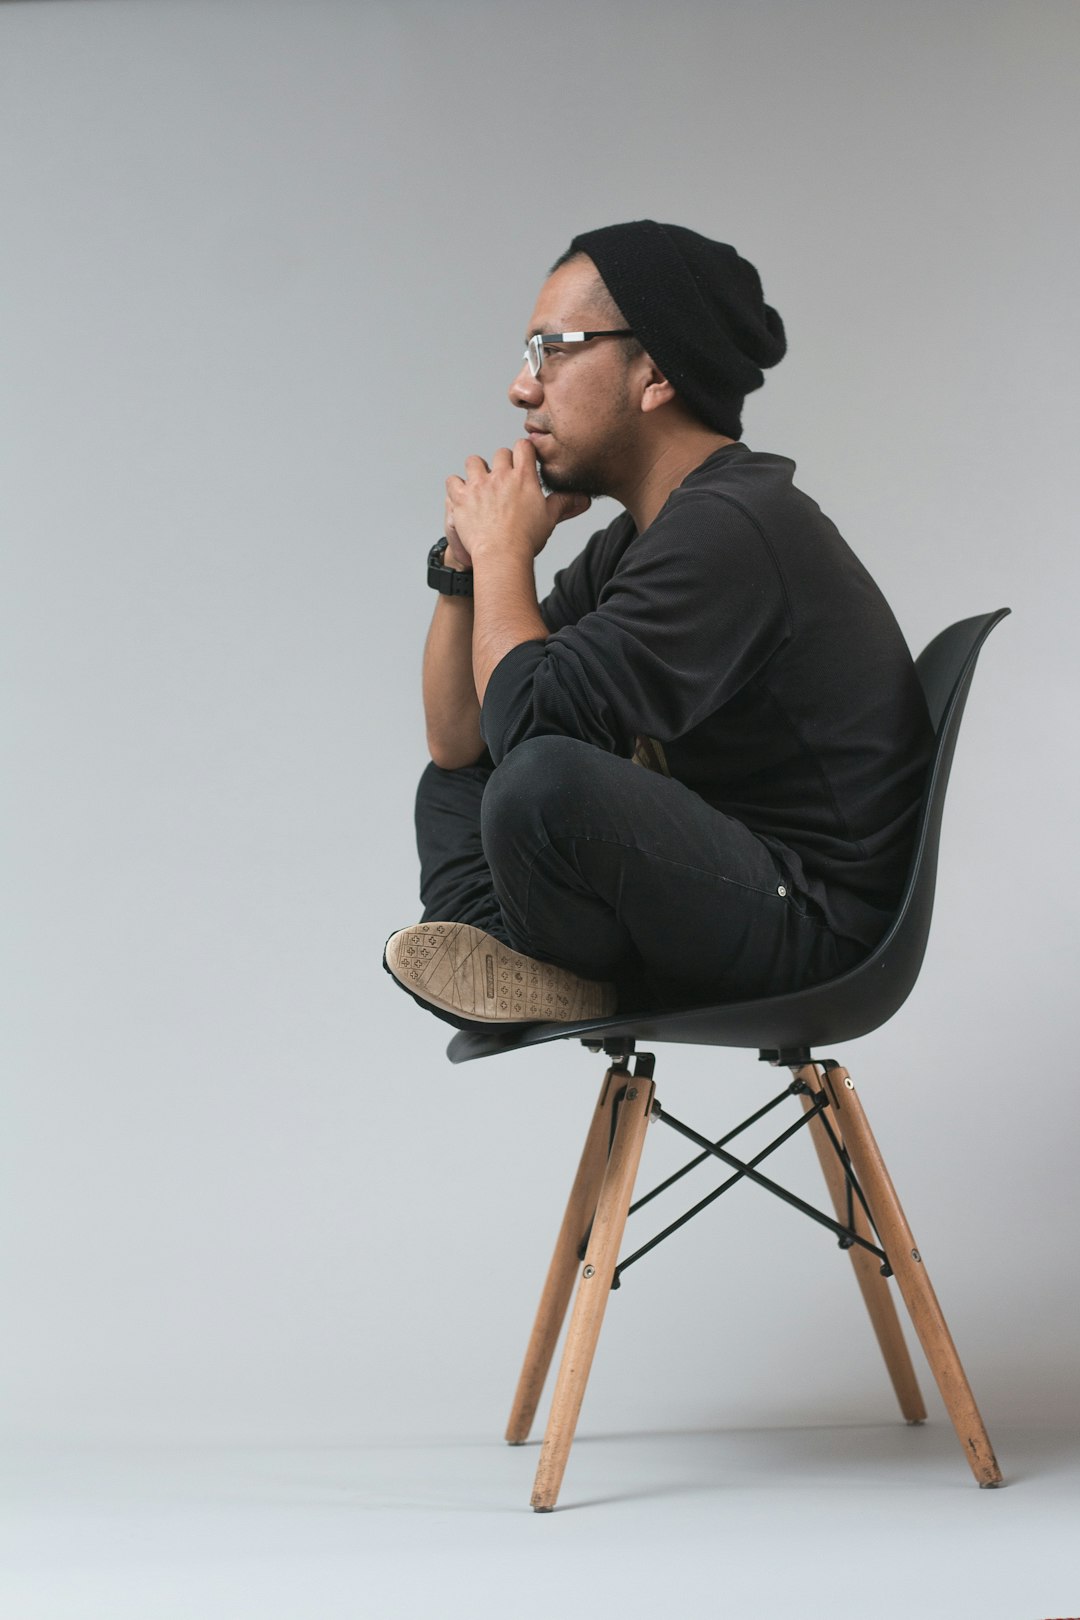 man sitting on chair photo Free Apparel Image on Unsplash